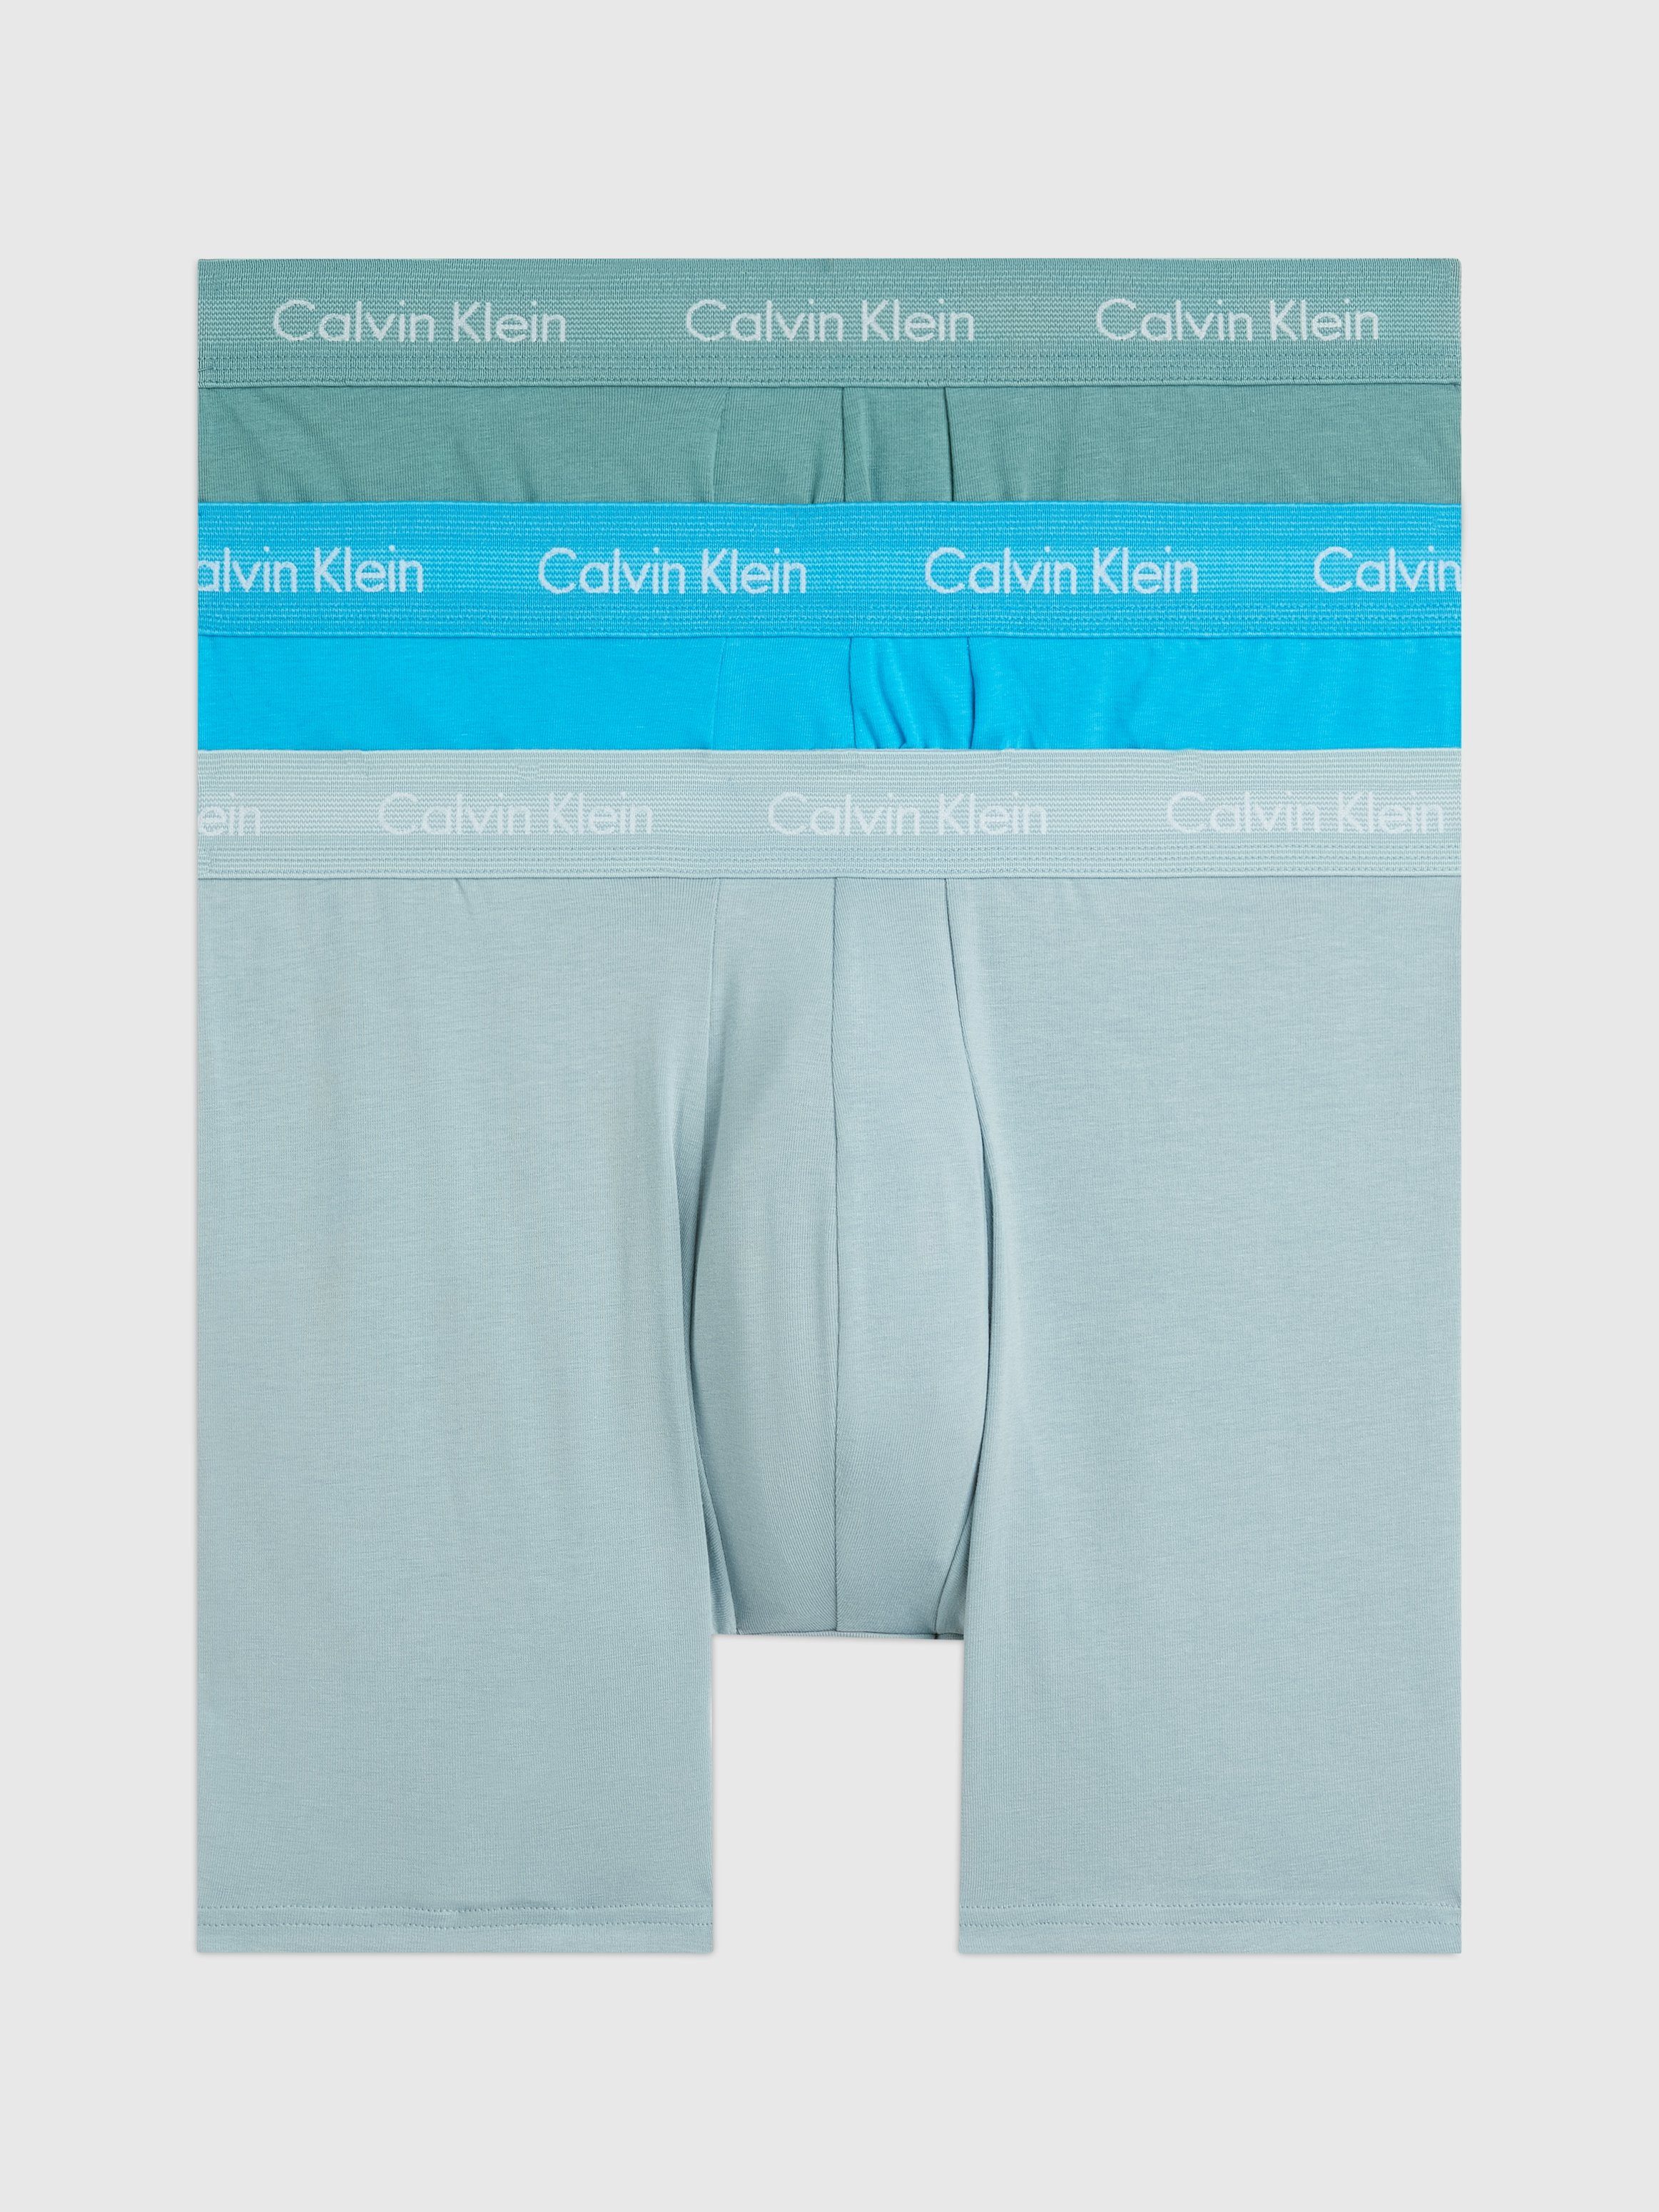 Calvin Klein Boxershorts long 3-pack blauw-groen